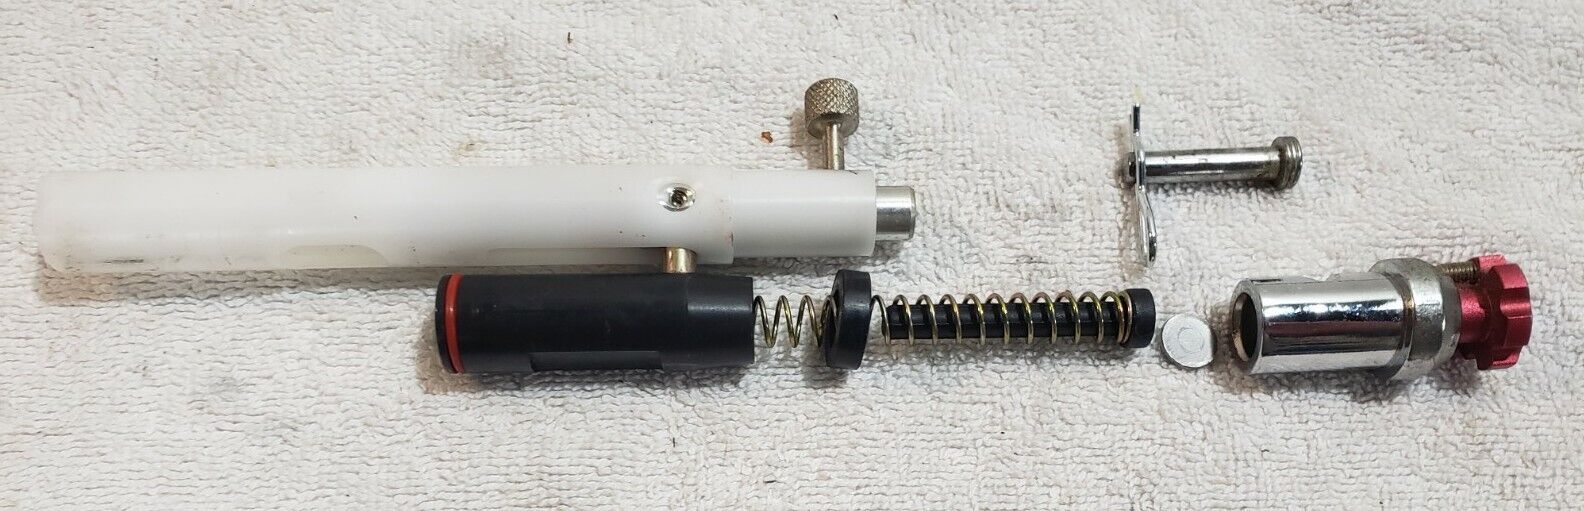 Spyder Pilot Paintball Gun Top Cocking Acs Bolt Hammer Cocking Lug Screw Parts R